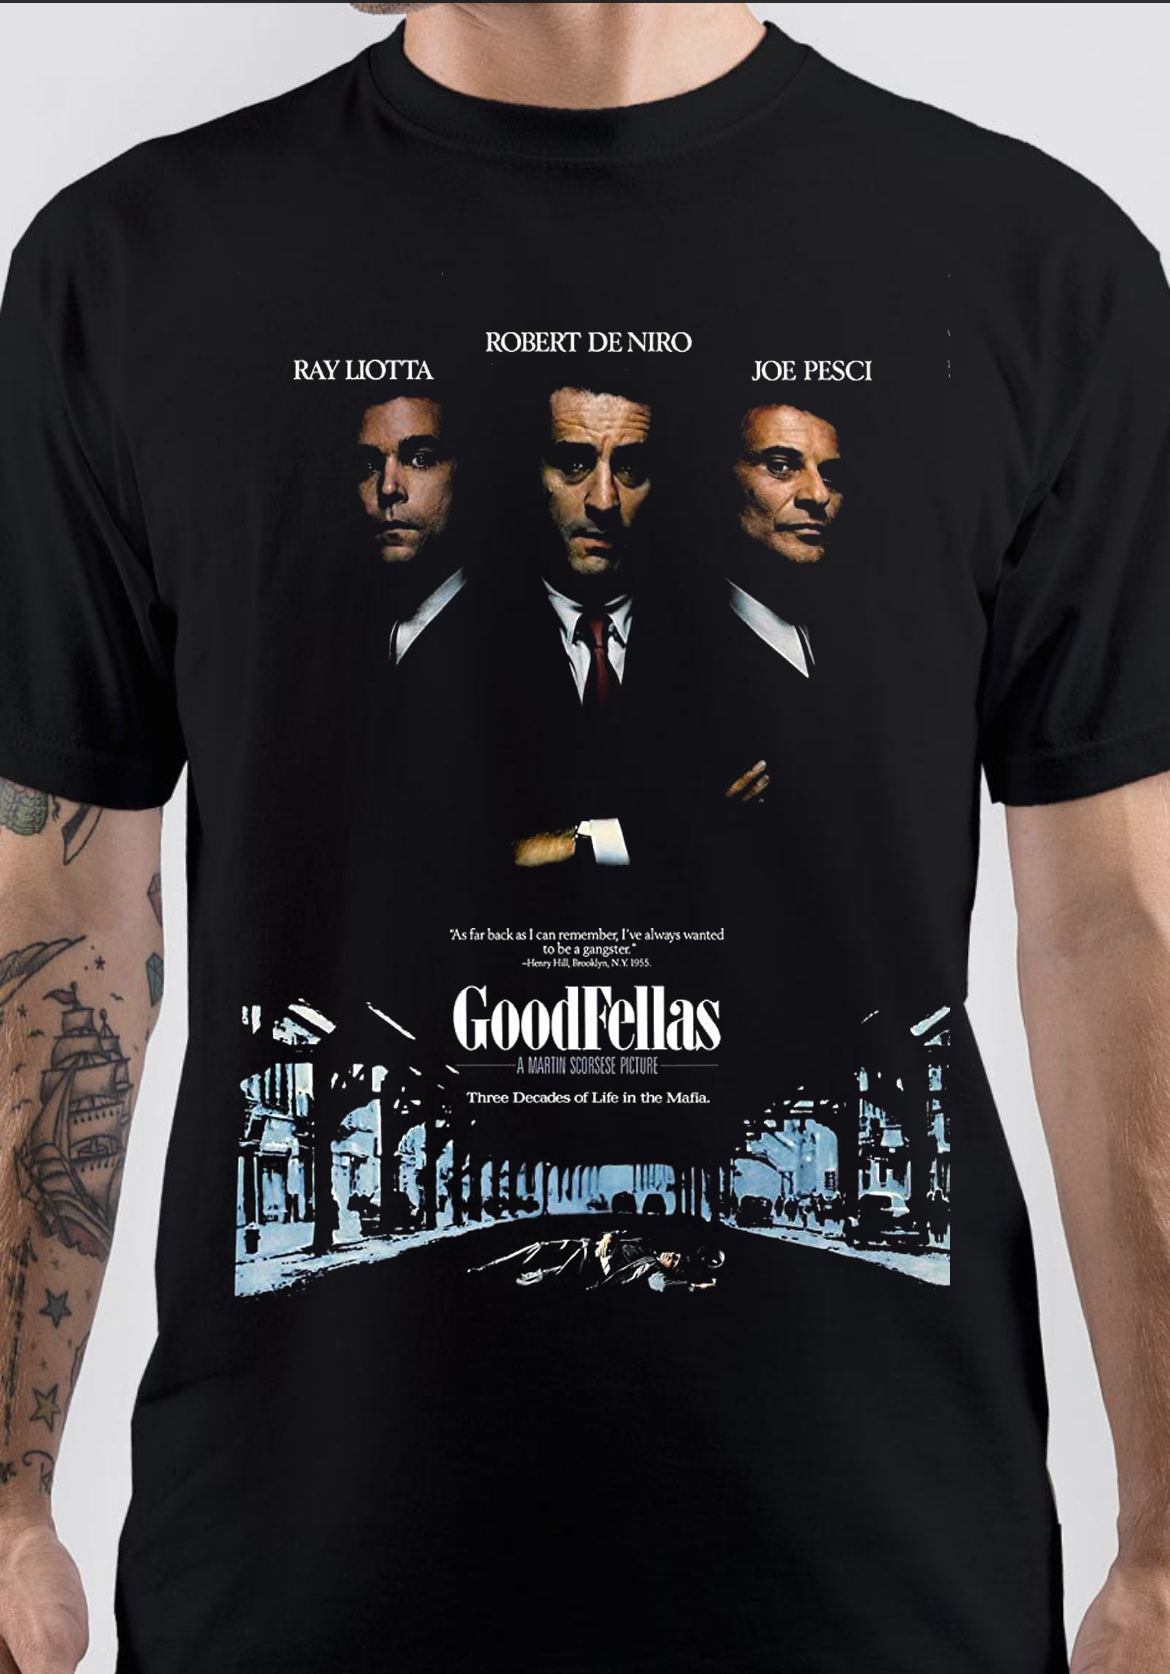 Goodfellas T-Shirt And Merchandise